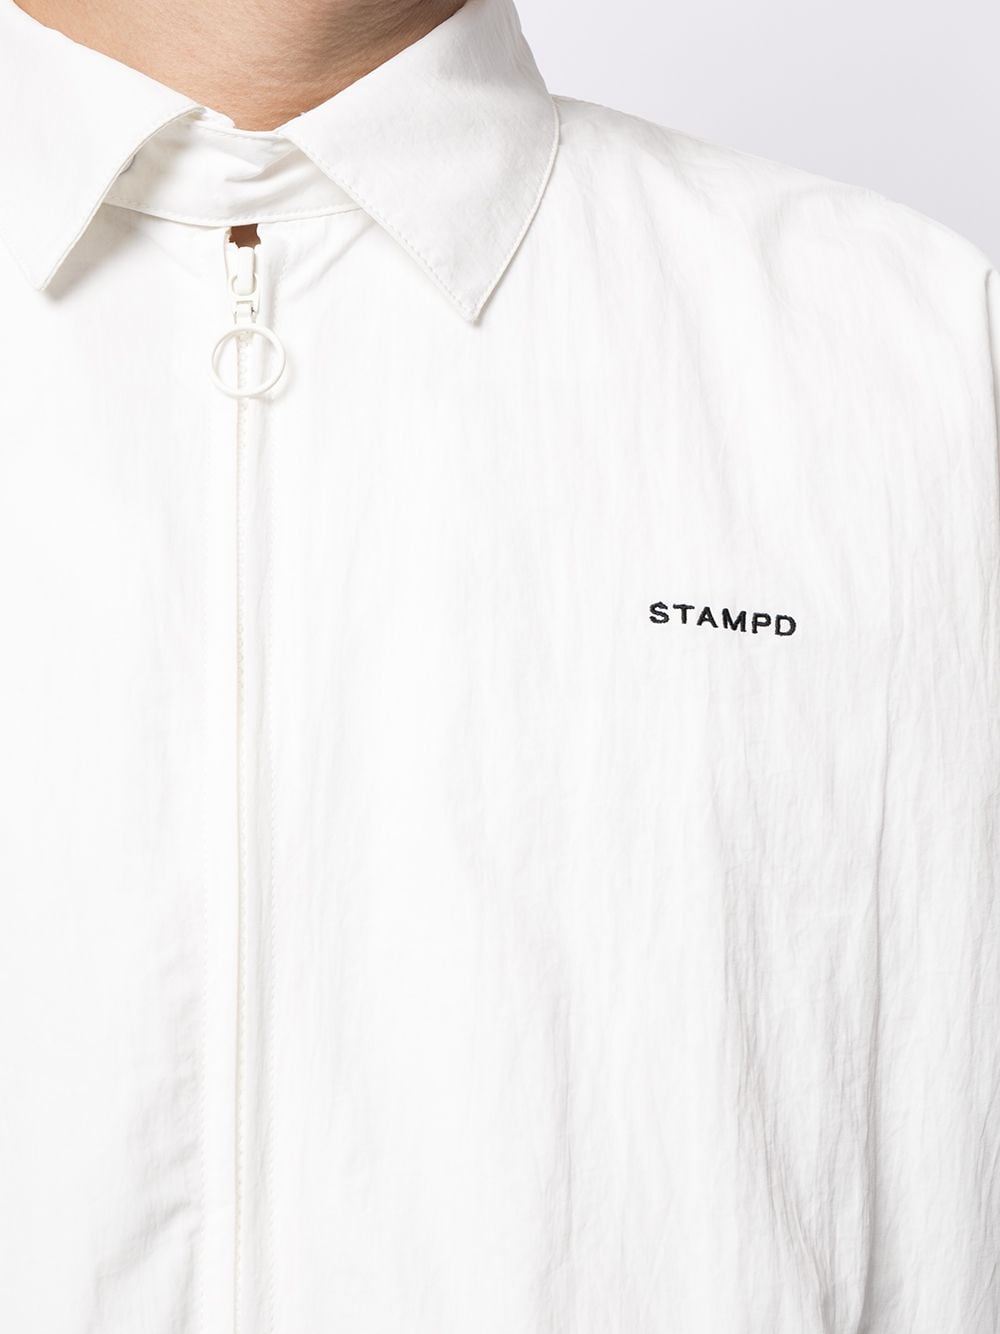 фото Stampd легкая куртка с логотипом